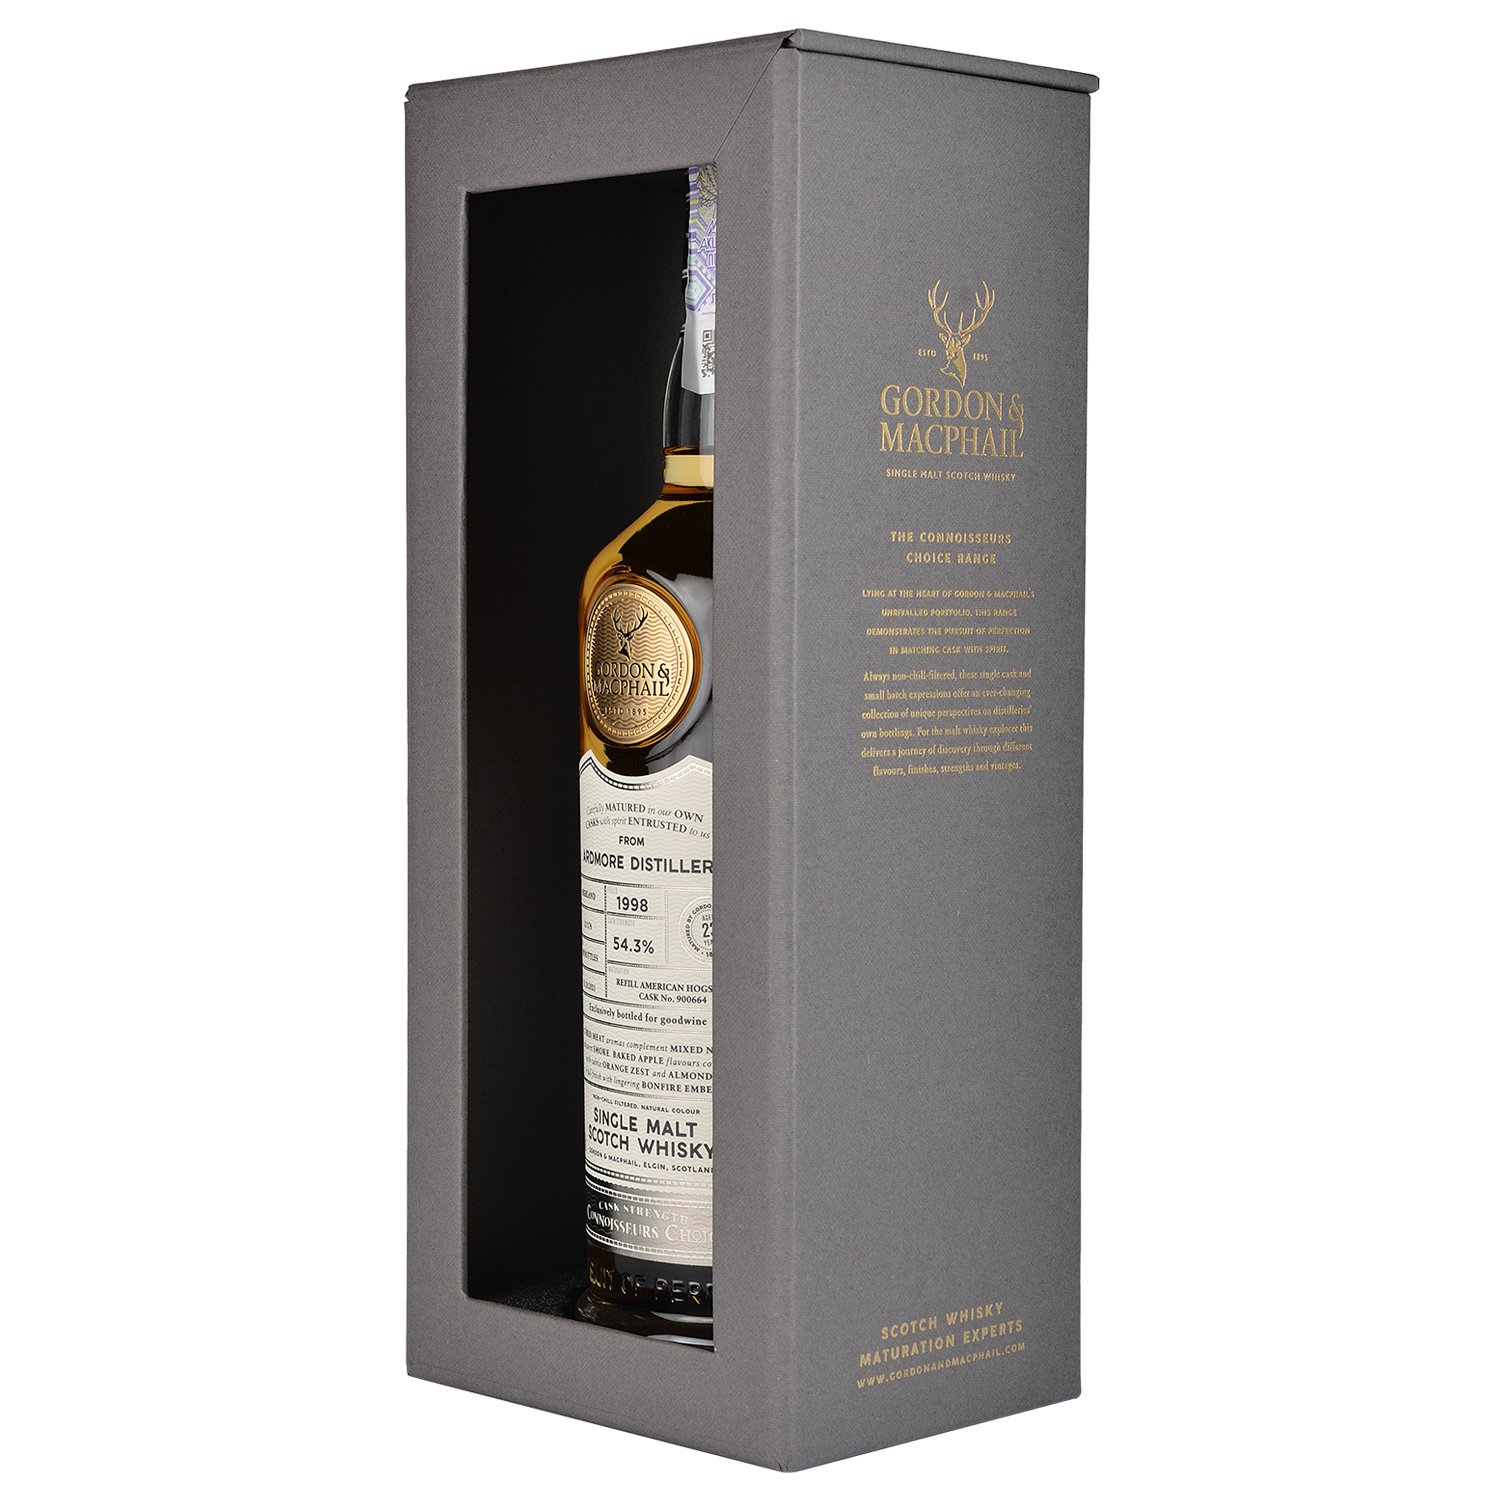 Віскі Gordon&MacPhail Ardmore Connoisseurs Choice 1998 Batch 21/176 Single Malt Scotch Whisky, в подарунковій упаковці, 54,3%, 0,7 л - фото 2